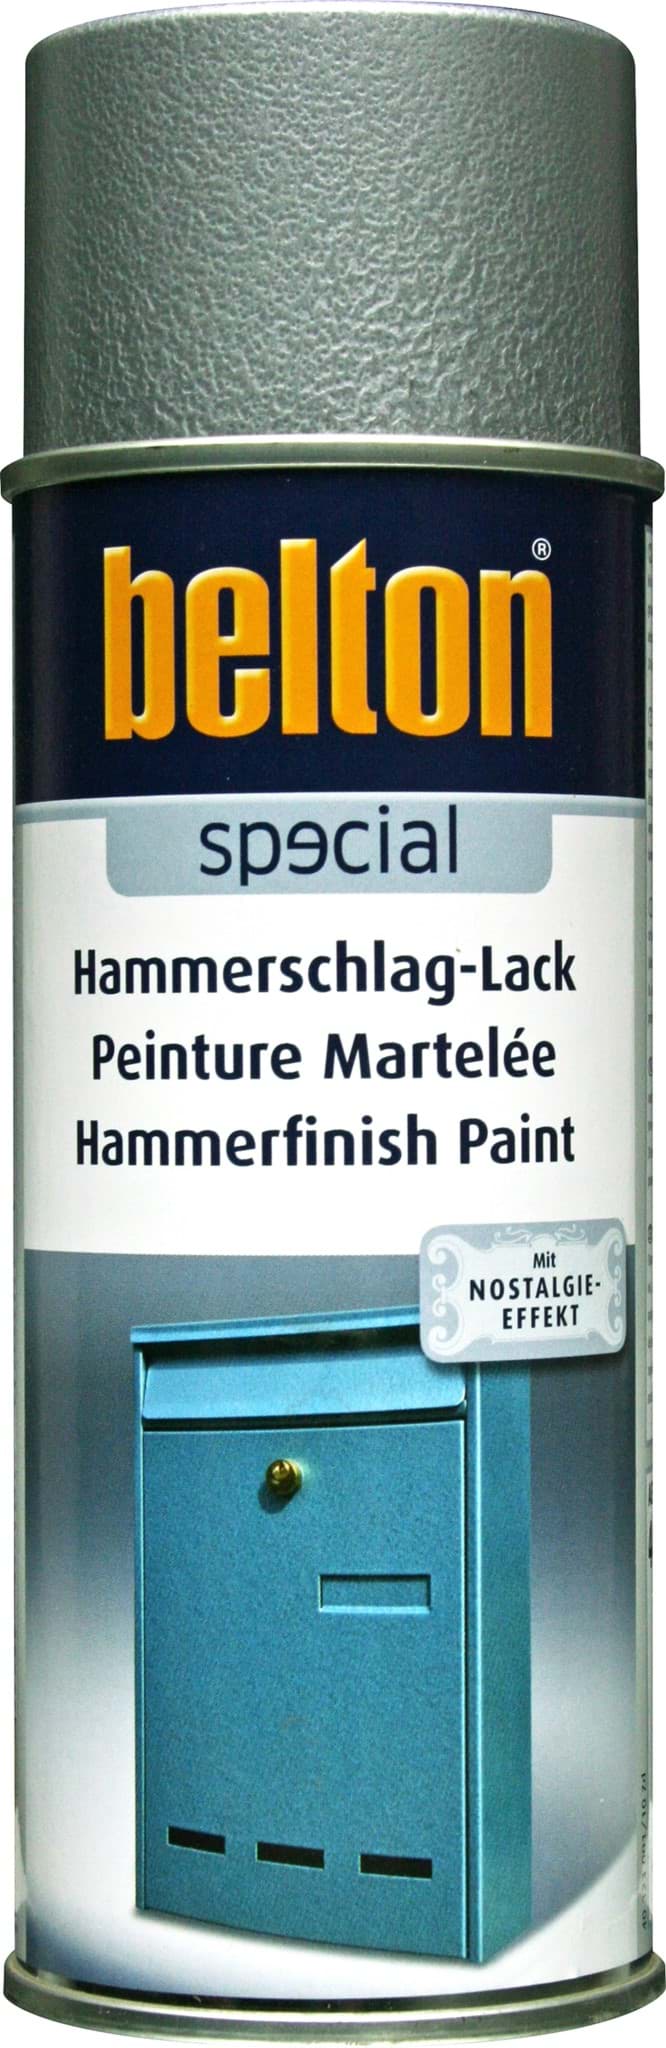 Belton special Hammerschlag-Lack silber resmi